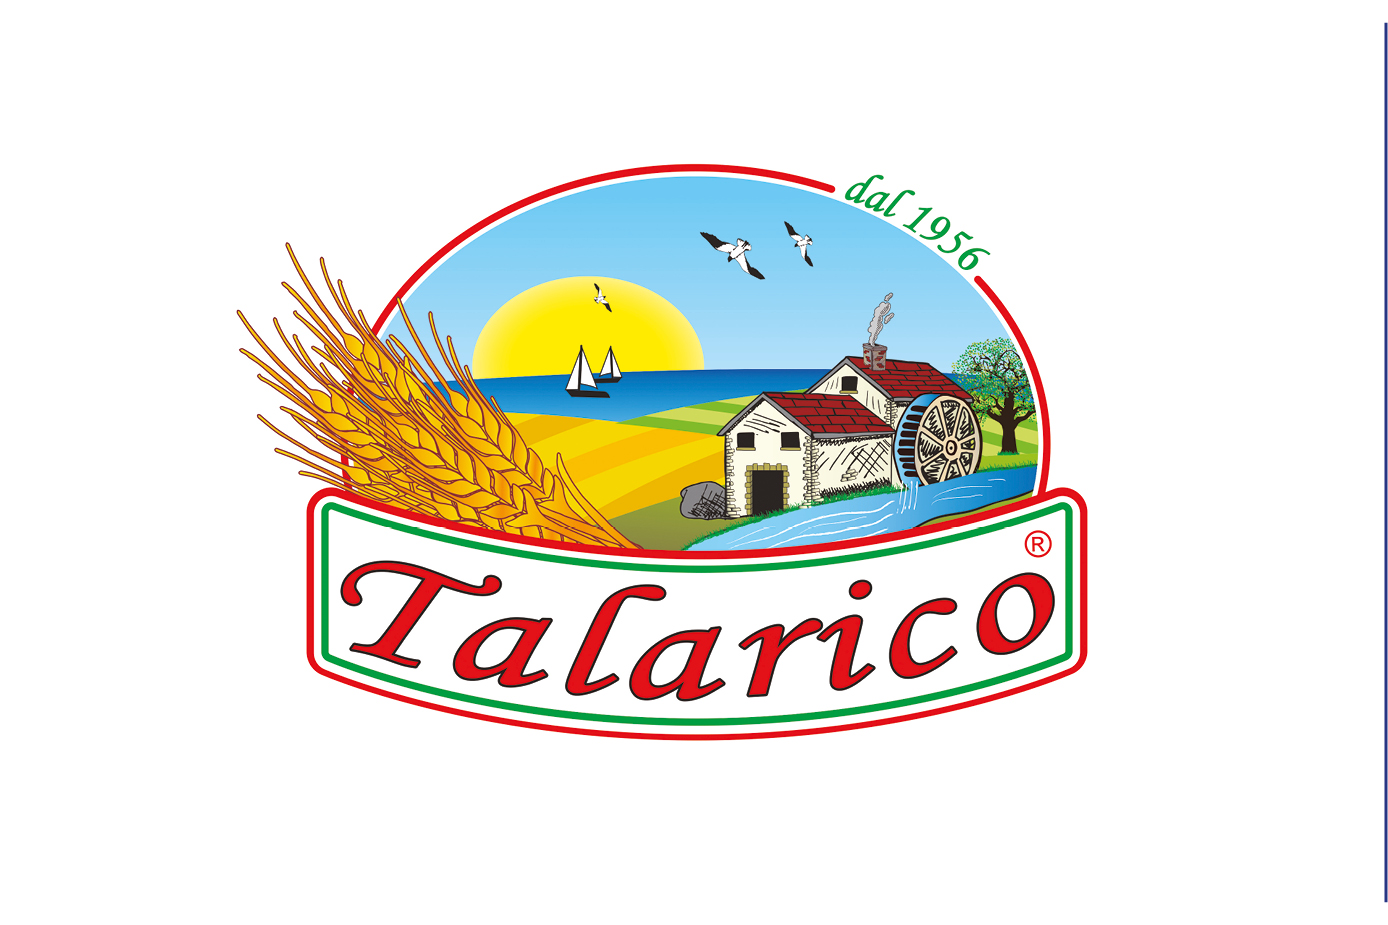 Talarico